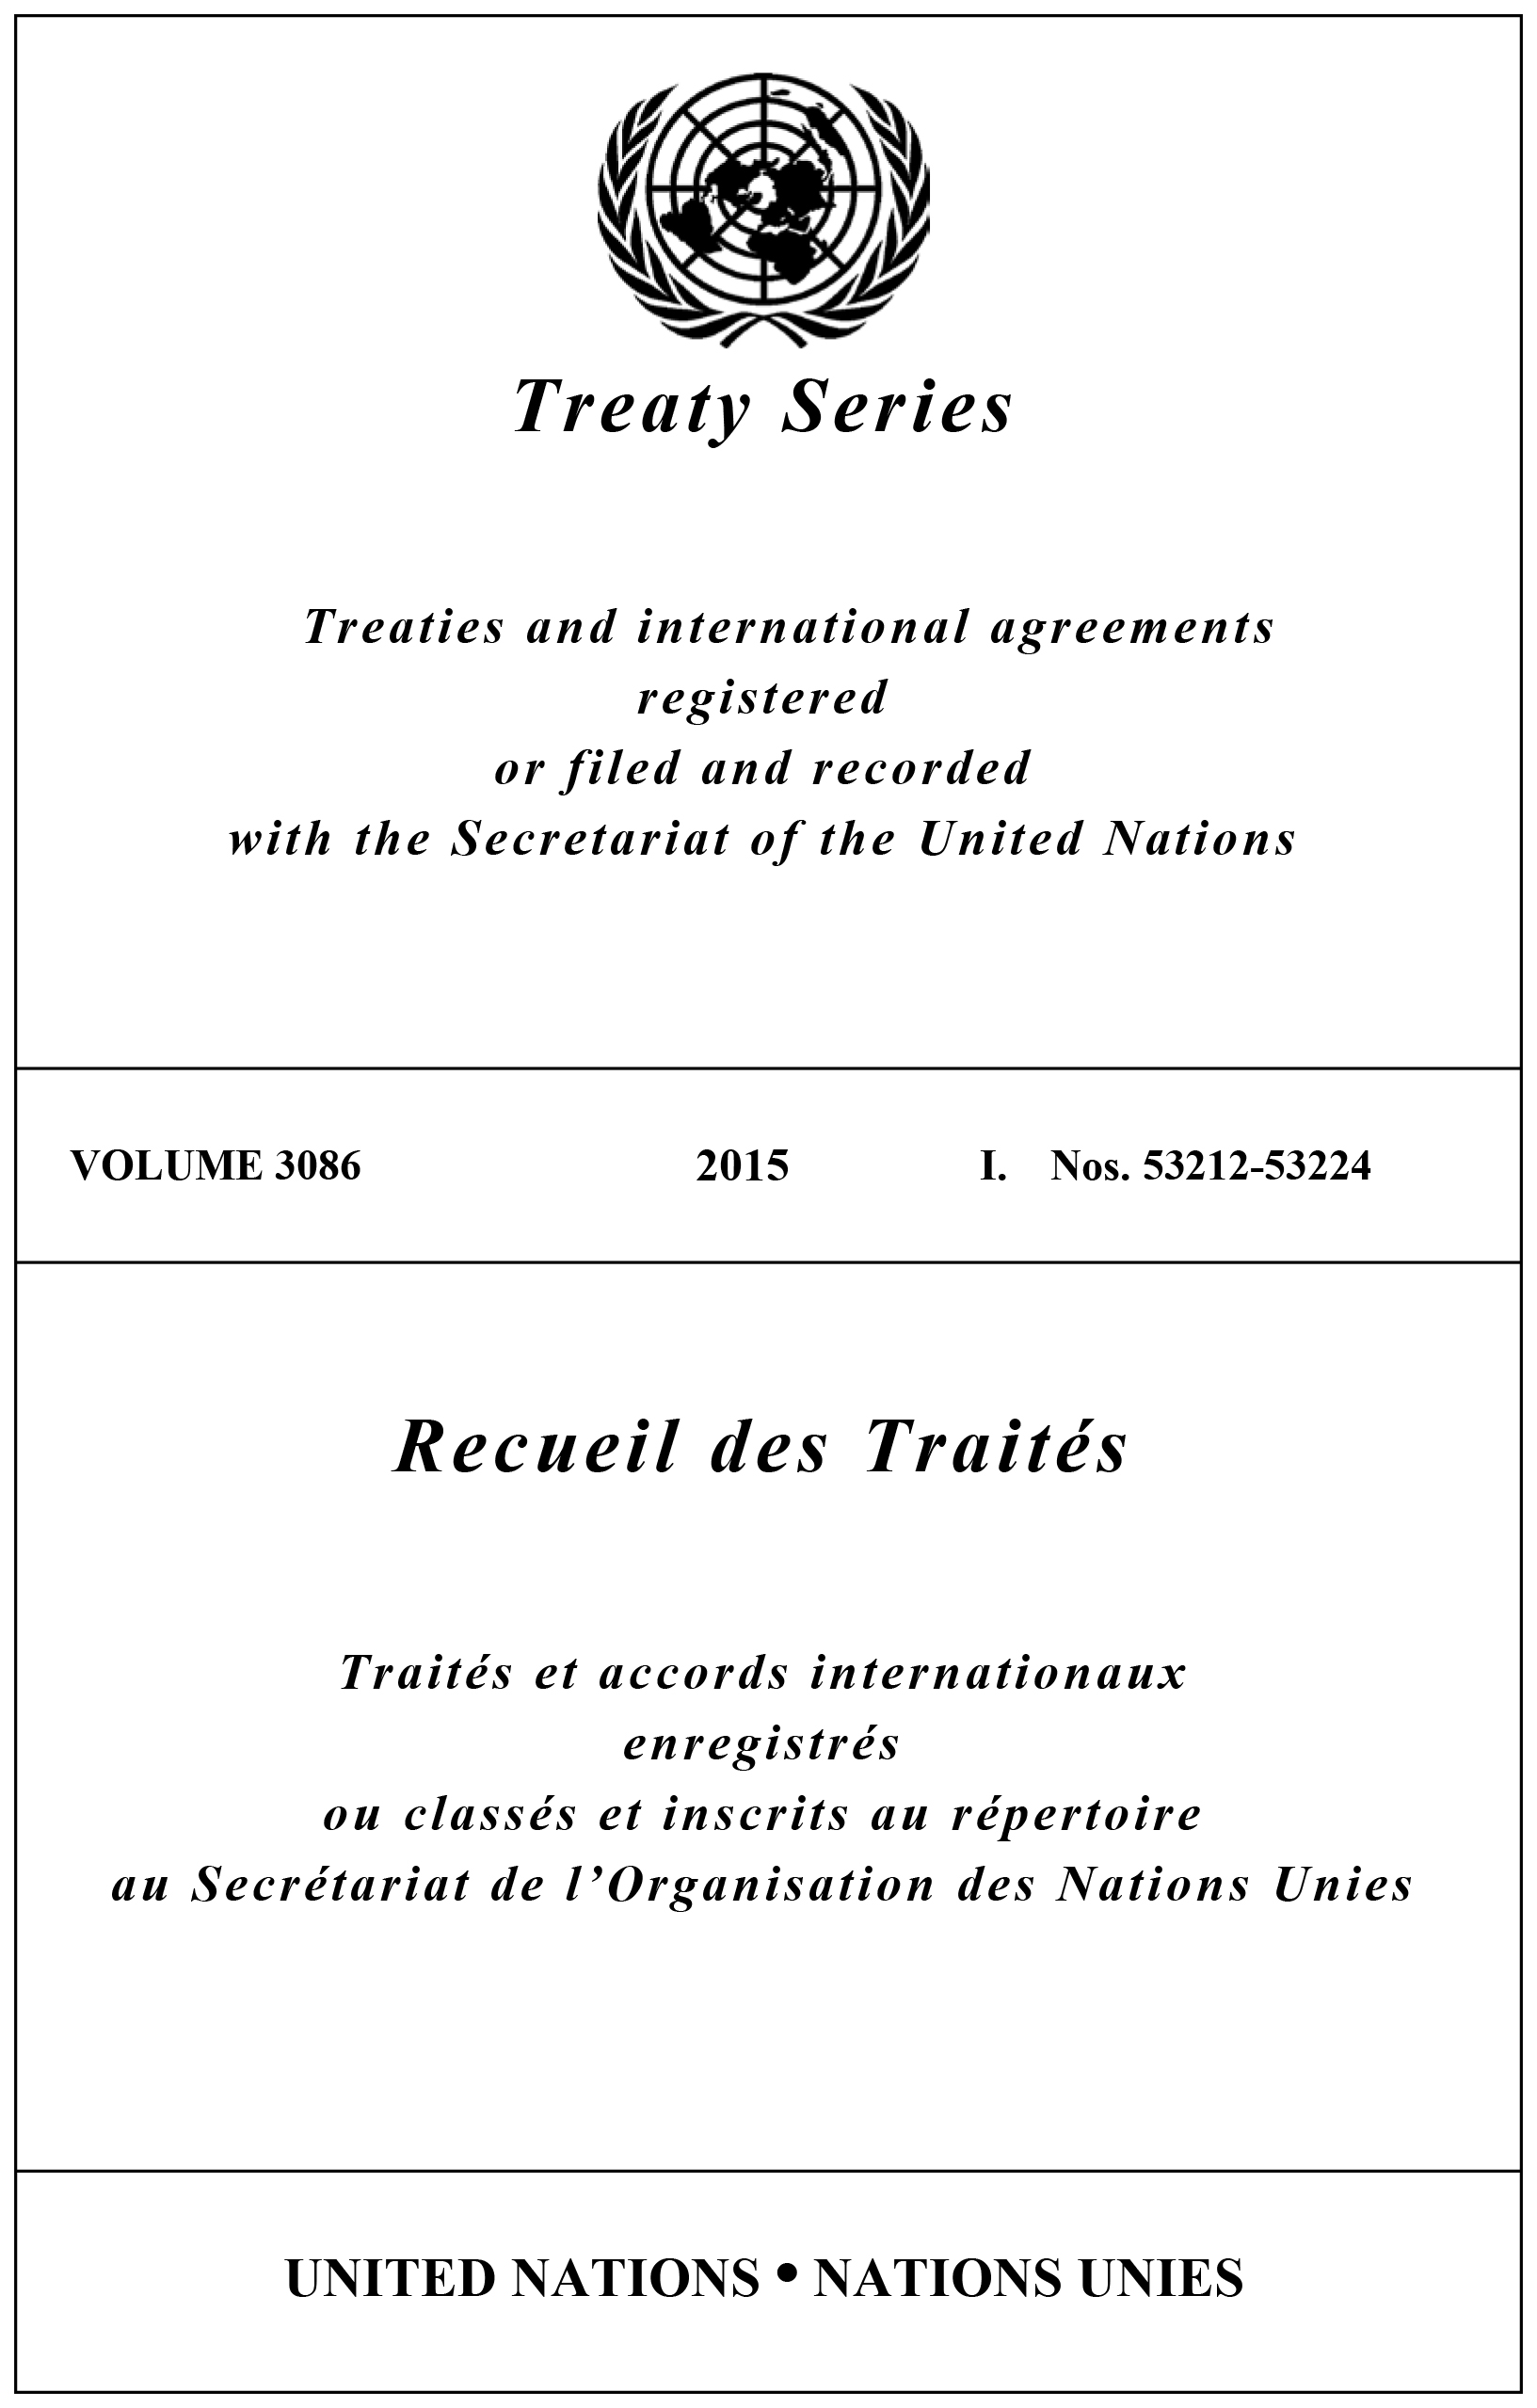 image of Treaty Series 3086